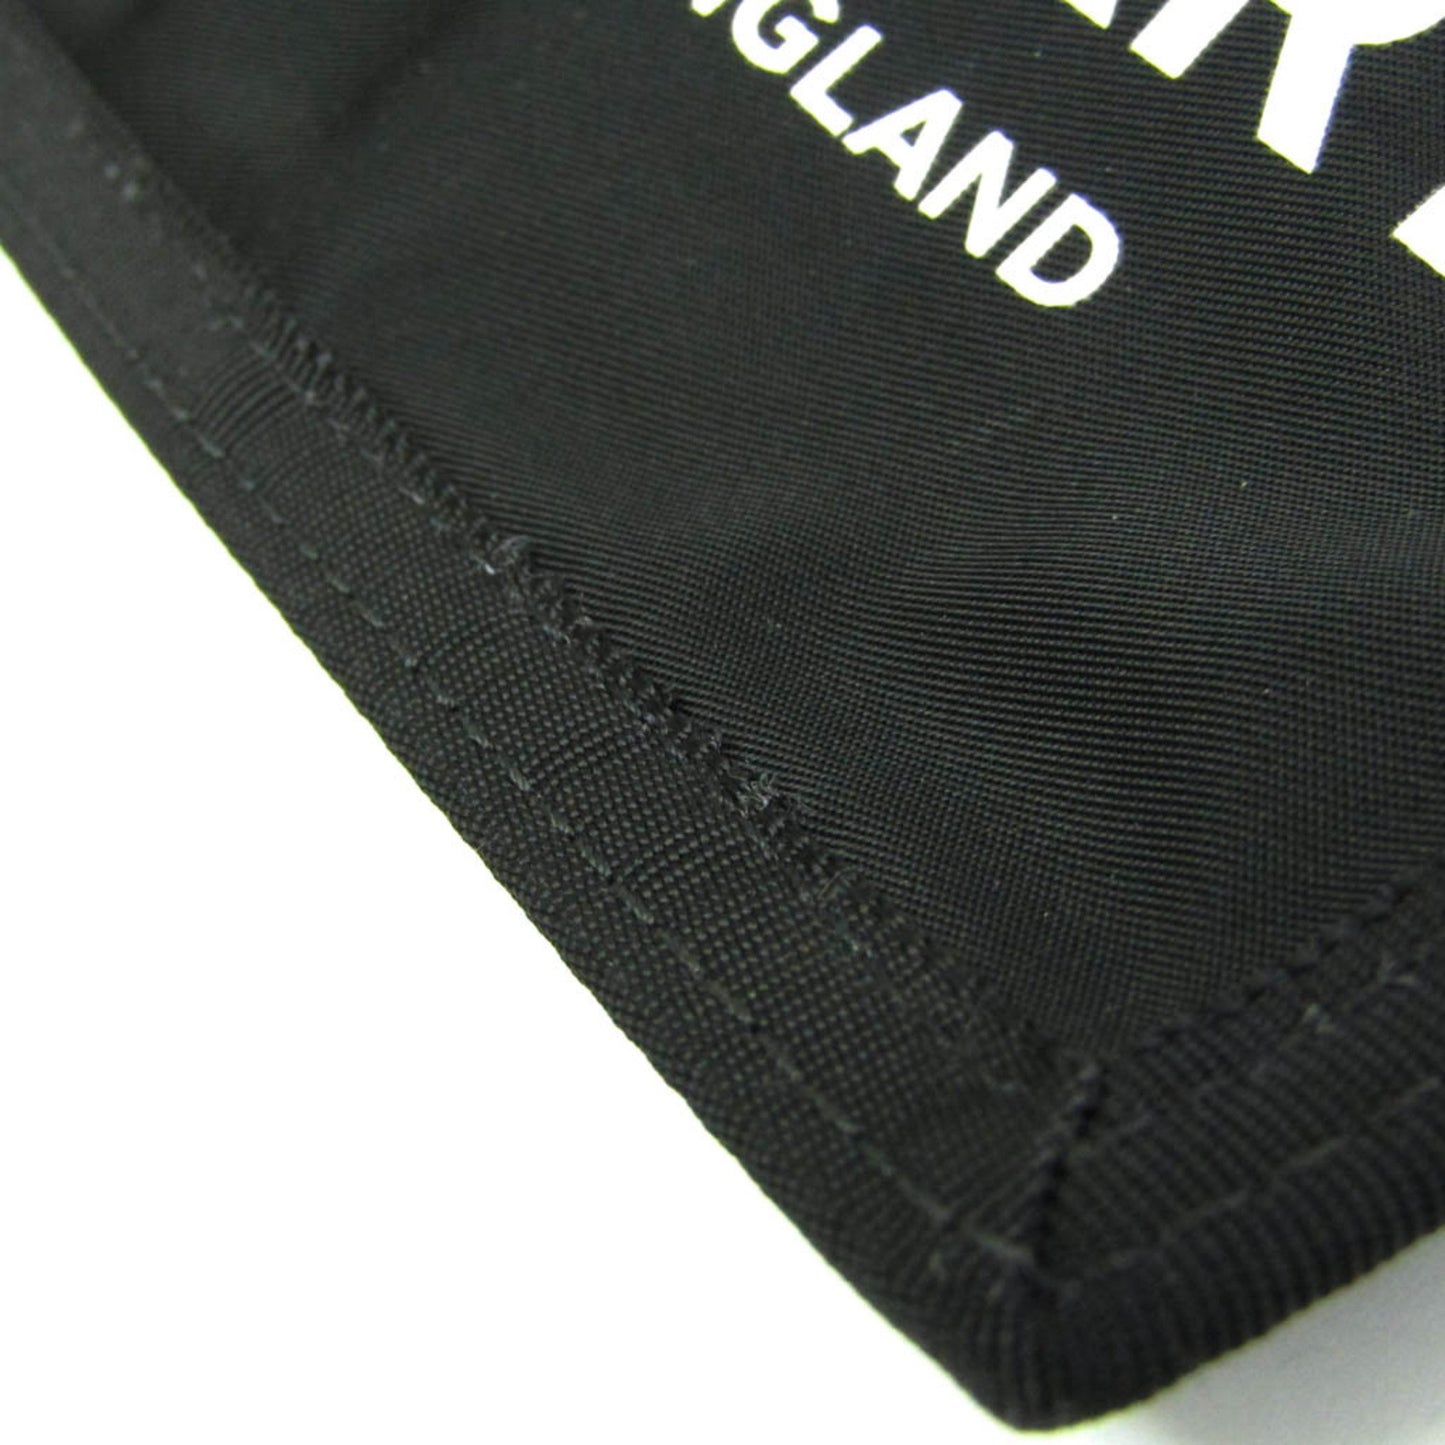 Burberry Women's Stylish Black Nylon Shoulder Bag in Black